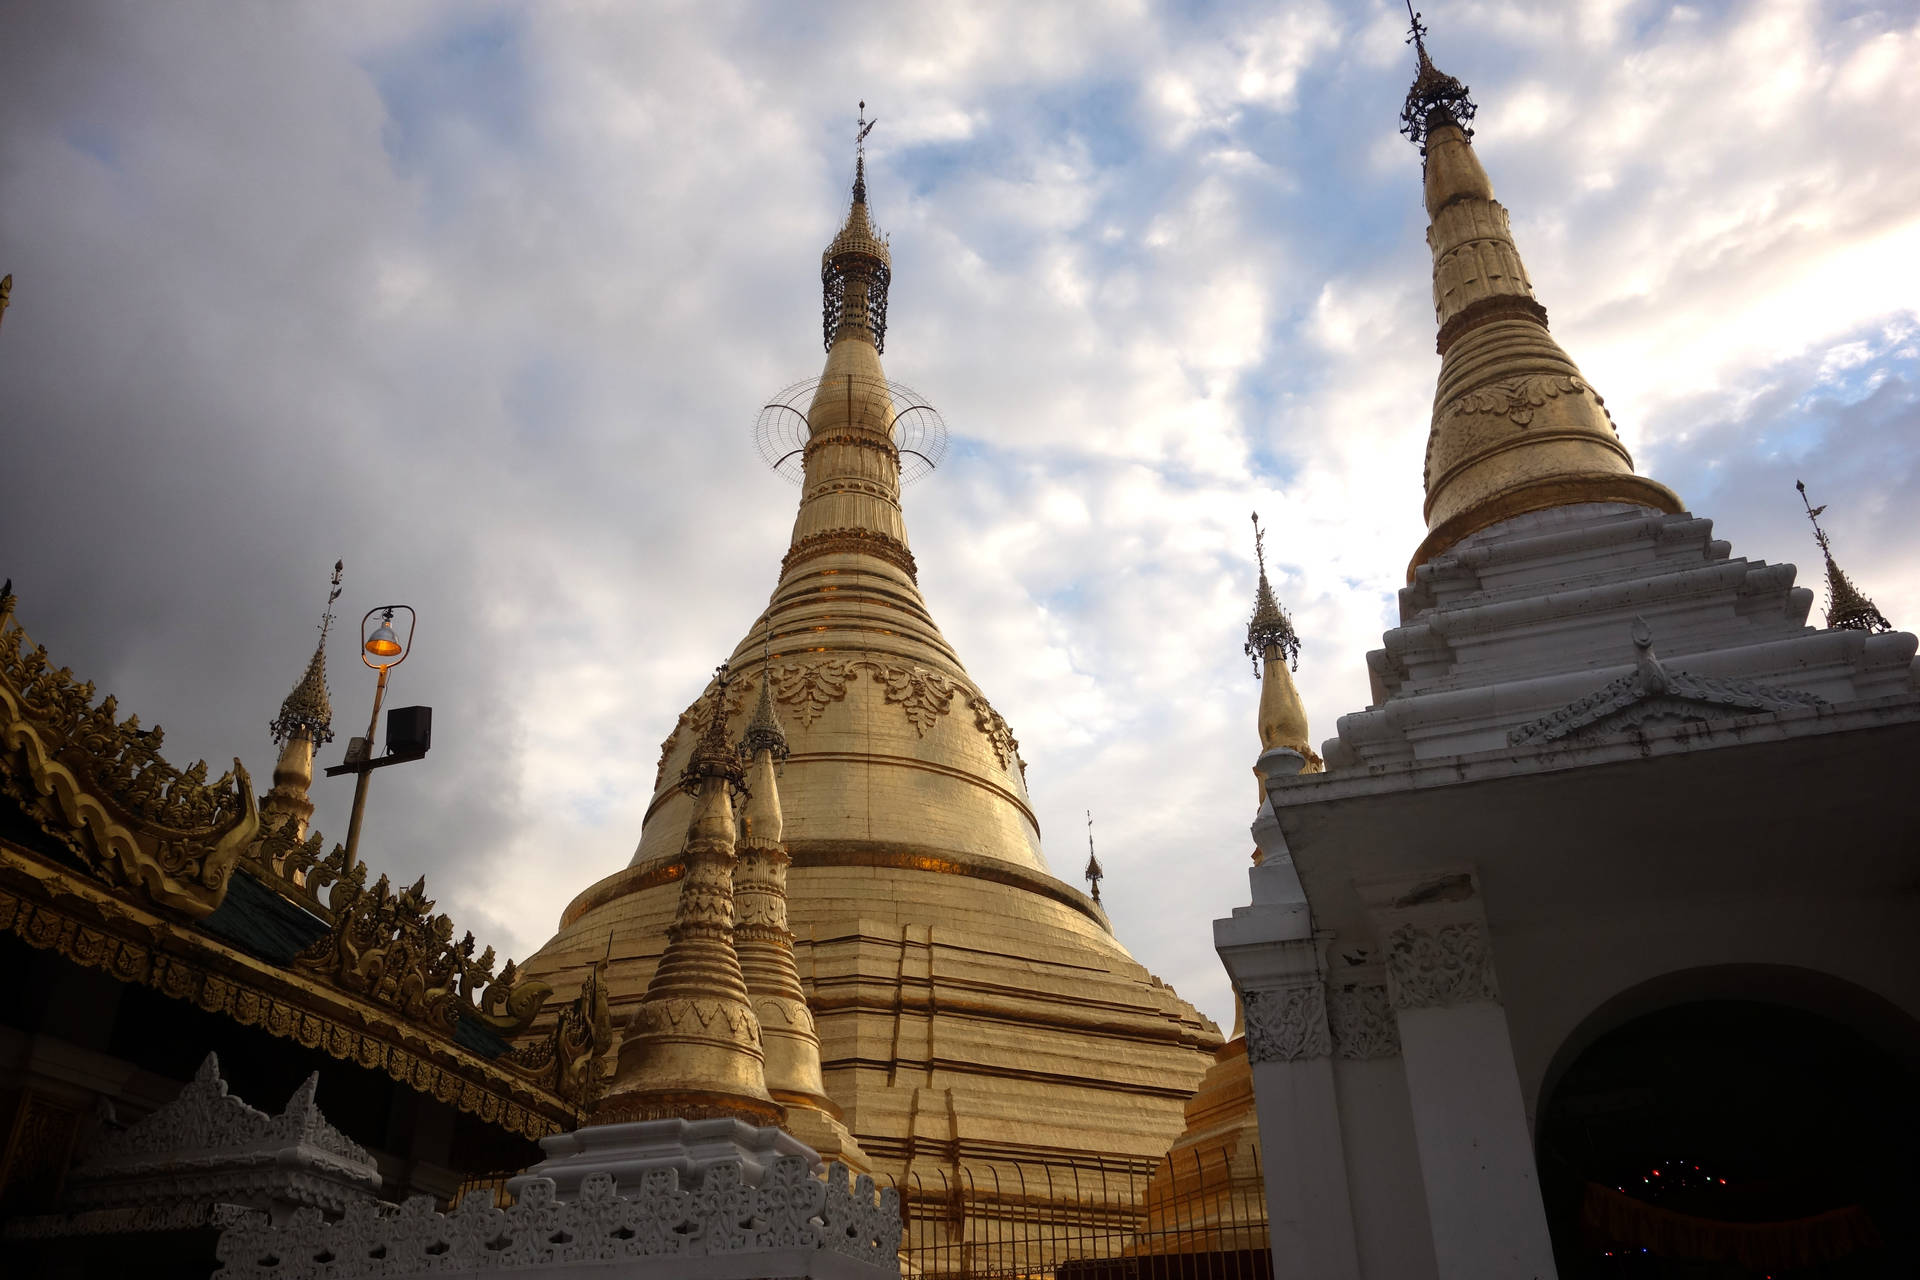 Yangon City Guld Pagodas Tapet: Se Yangon by berømte guldpagoder lige foran dig. Wallpaper